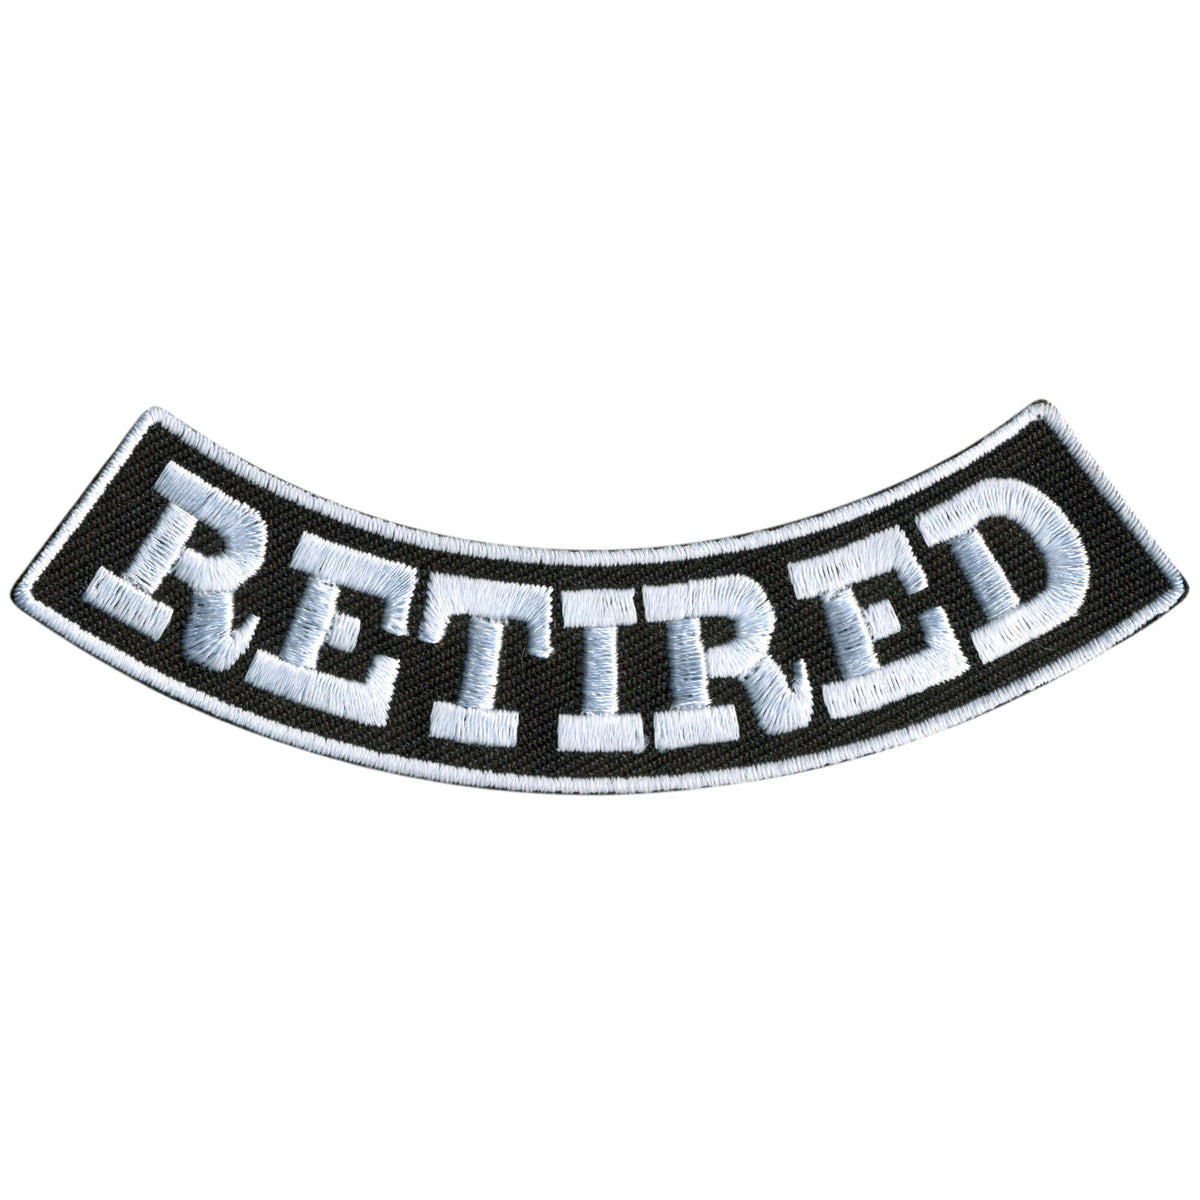 Hot Leathers Retired 4” X 1” Bottom Rocker Patch